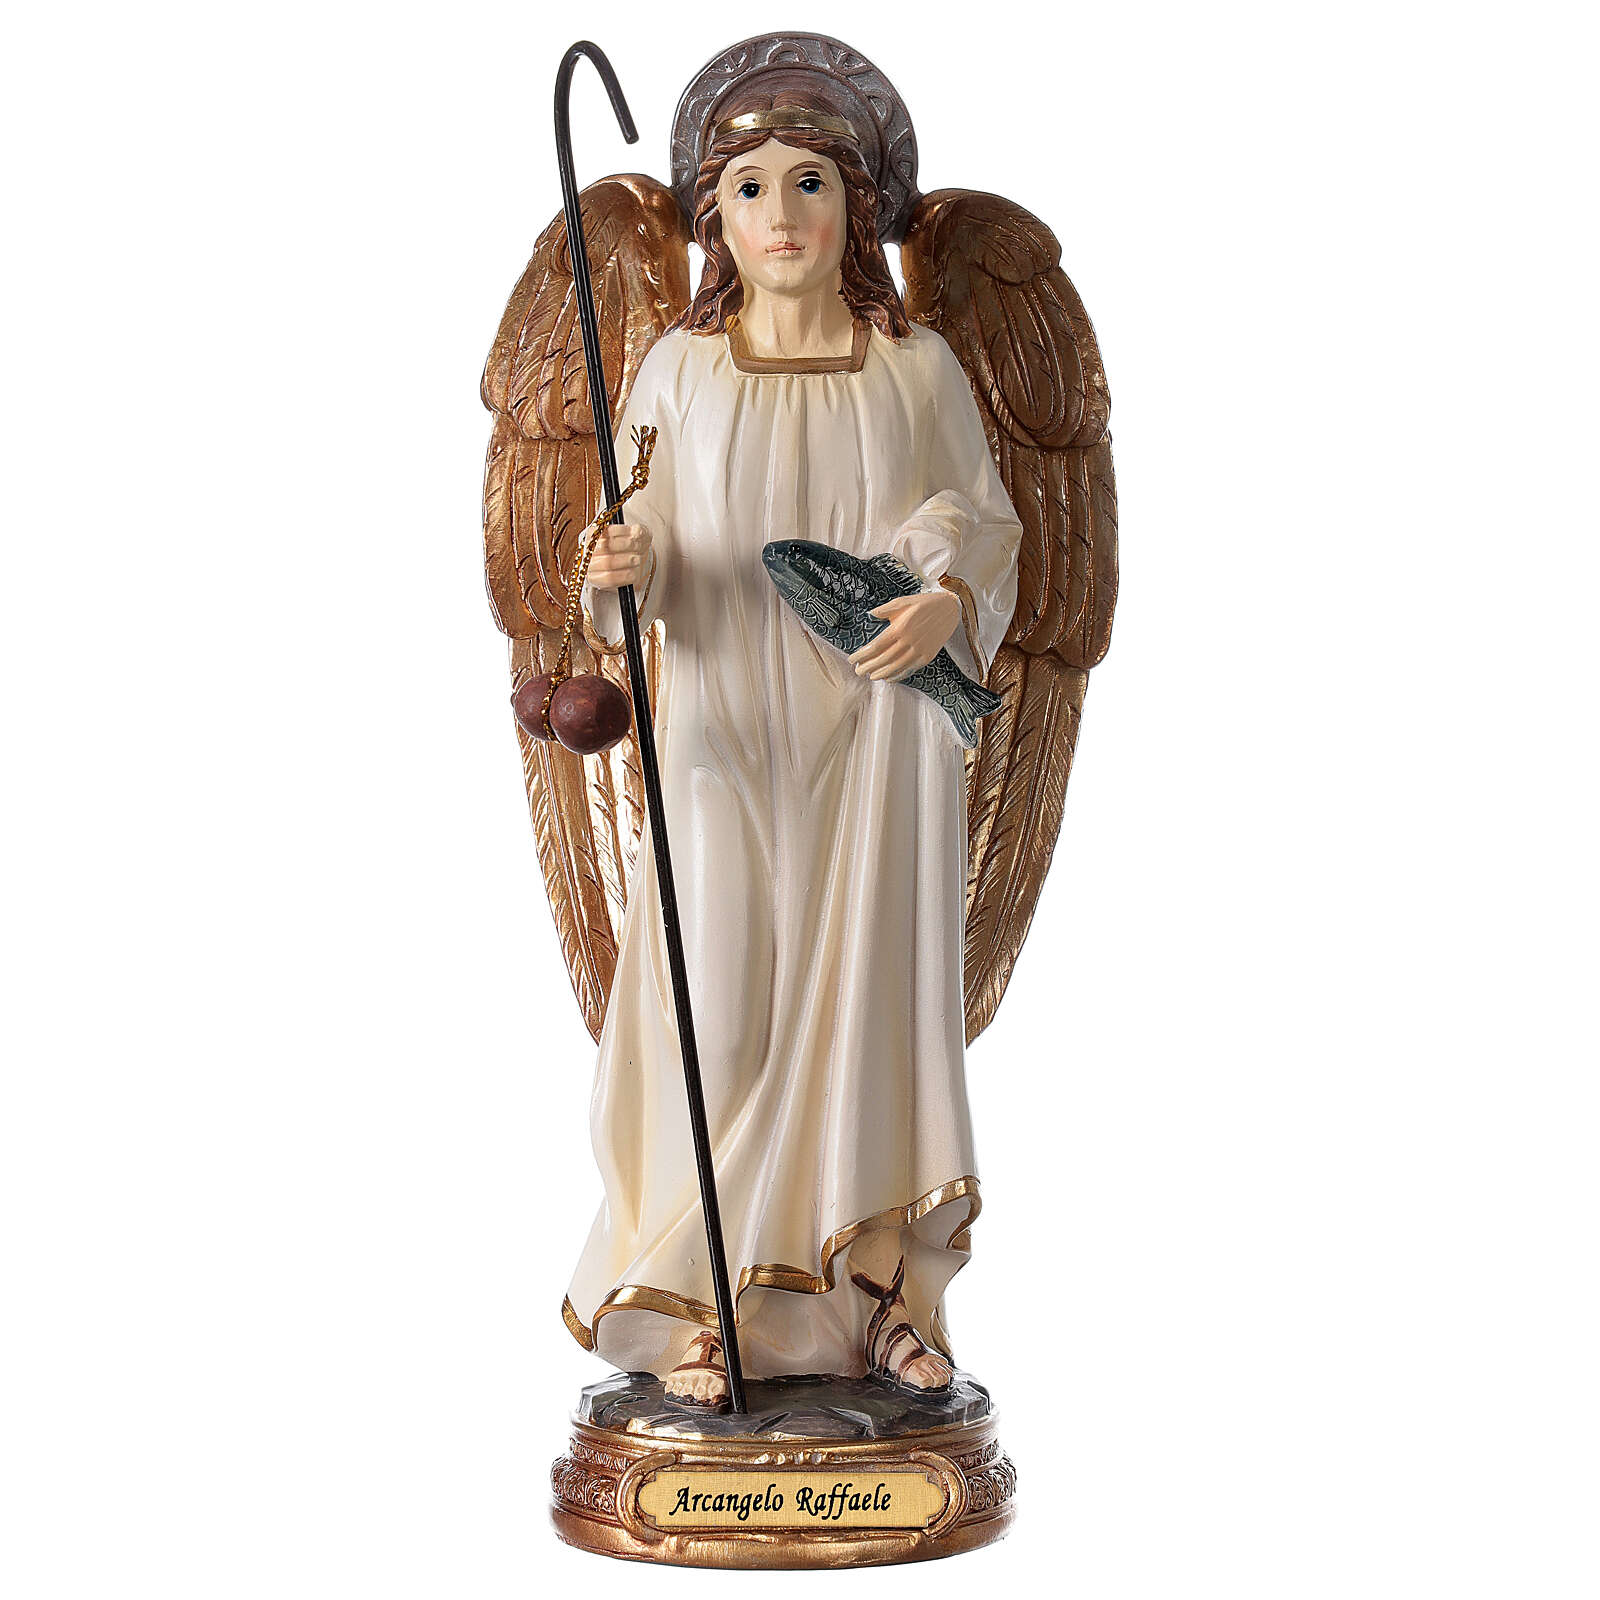 Archangel raphael statue